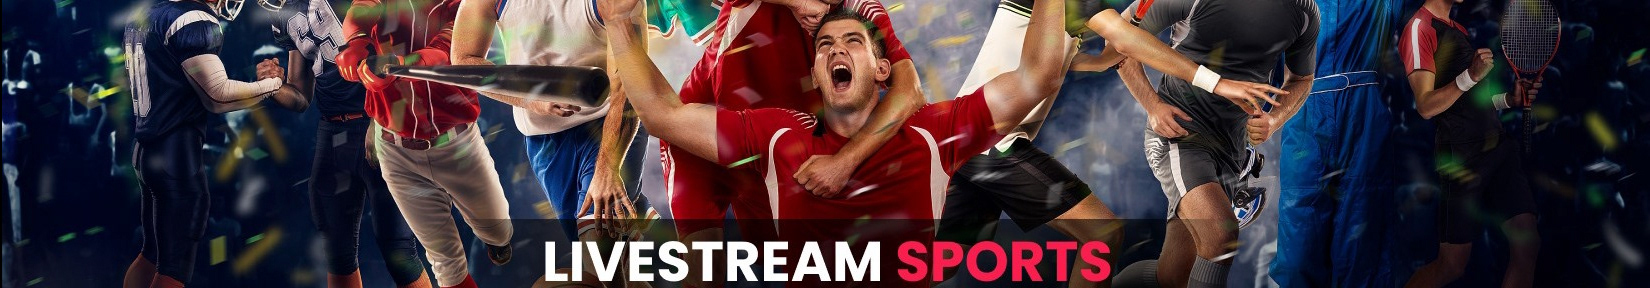 Bingsport Football Live Mobile's profile banner